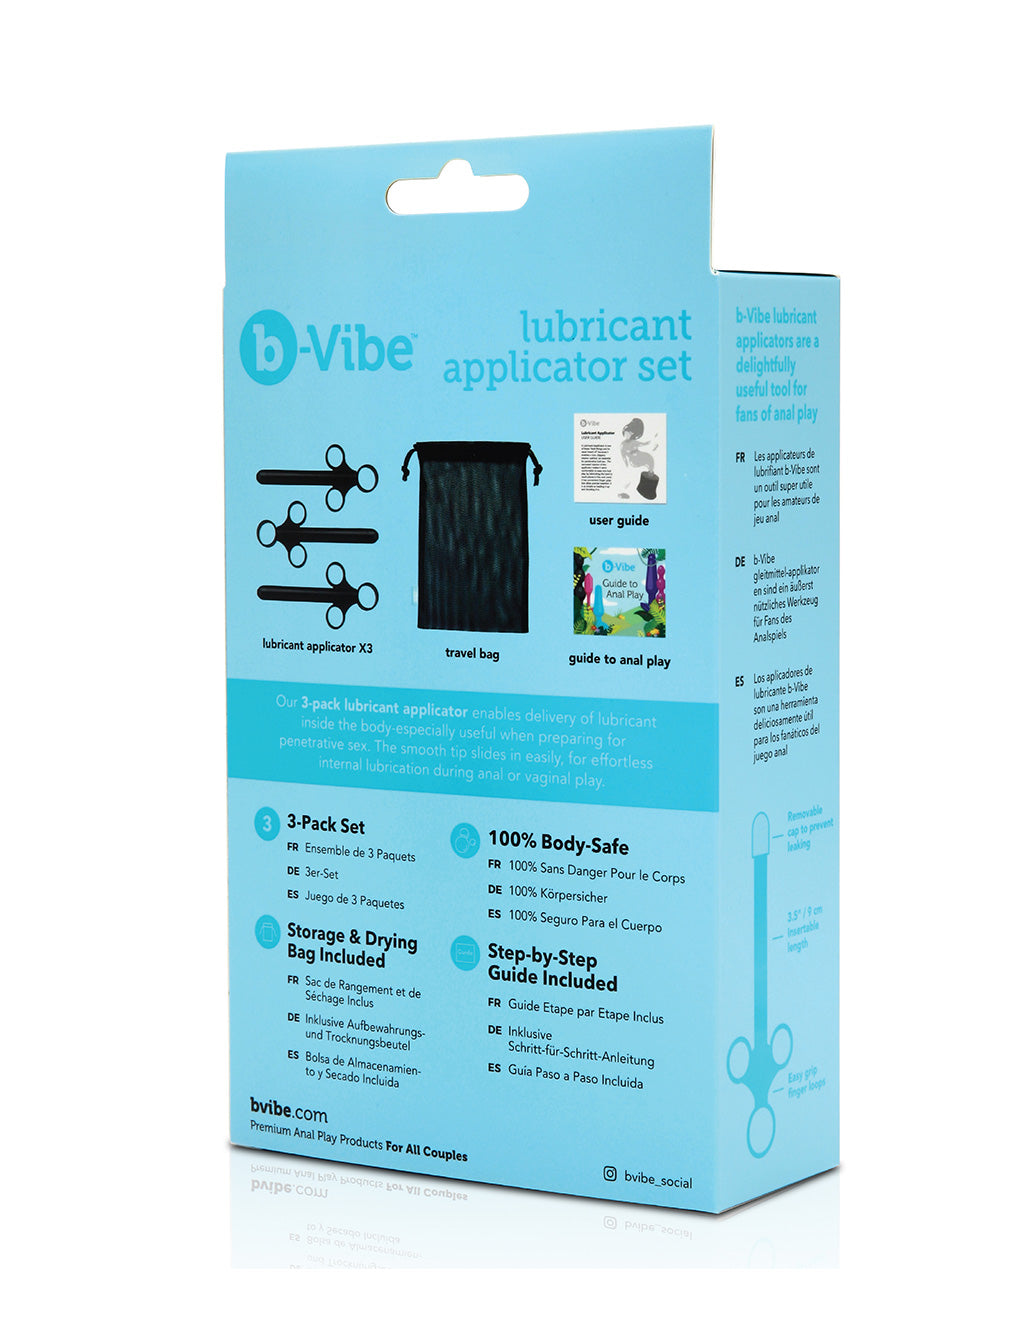 B-Vibe Lubricant Applicator Set- Back box